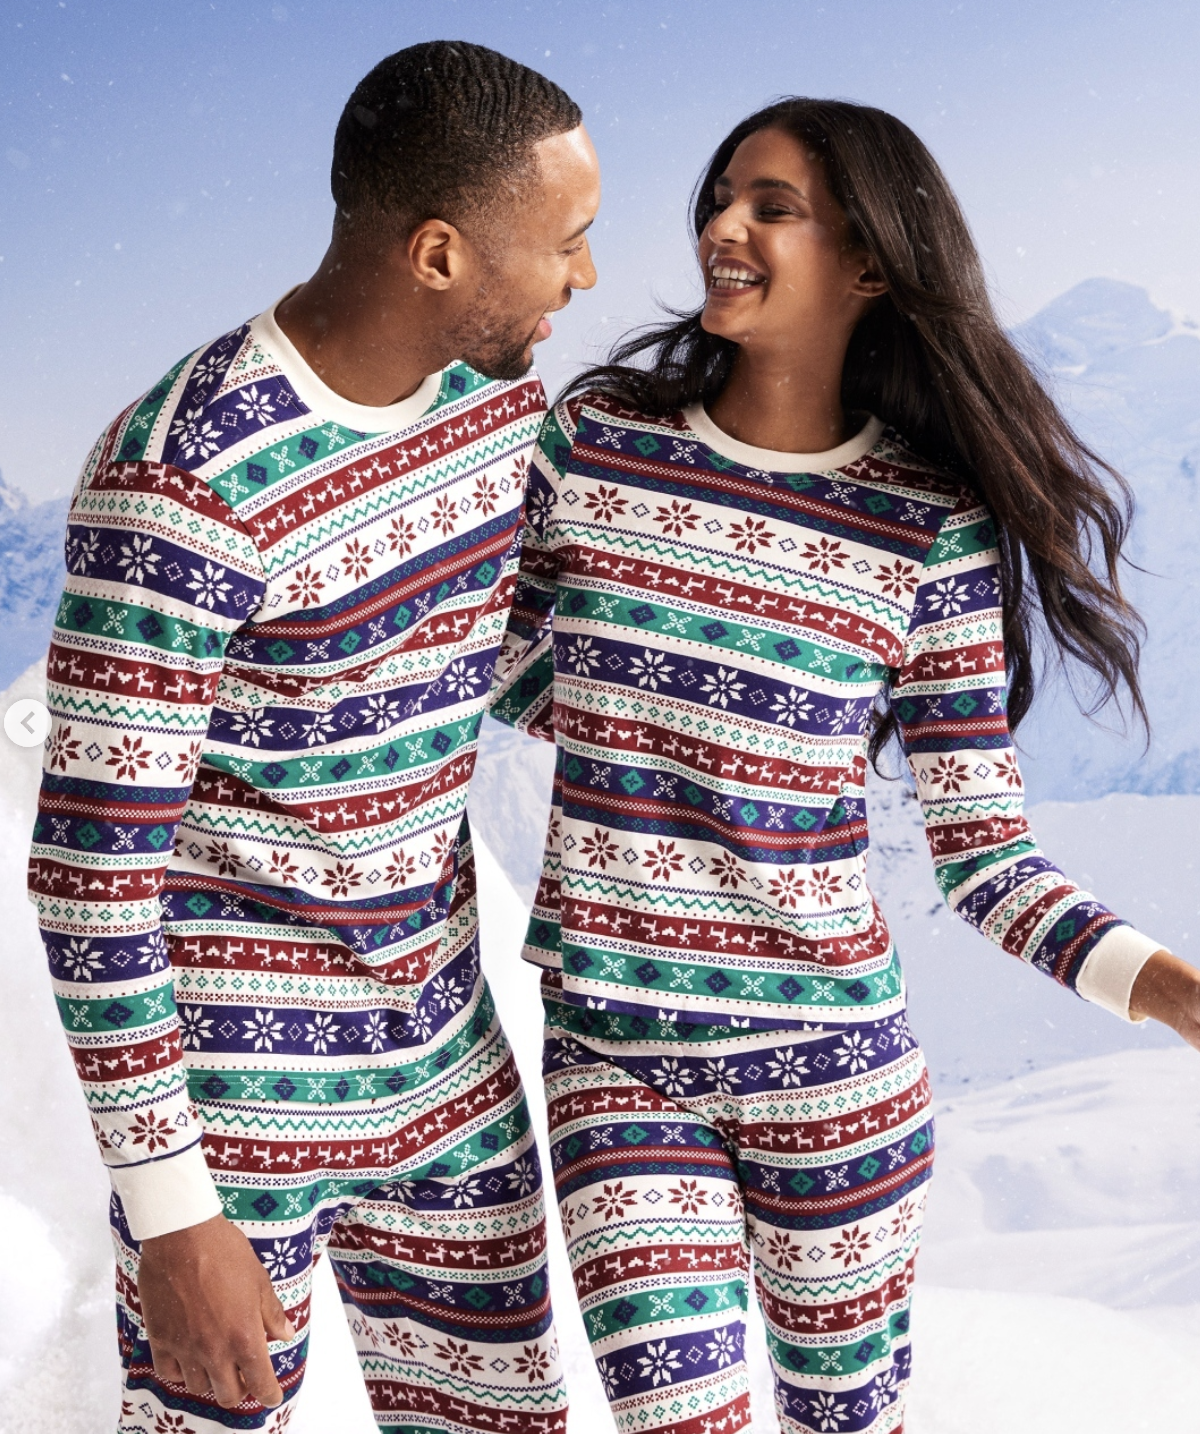 Two adults wear matching holiday-themed striped pyjamas.